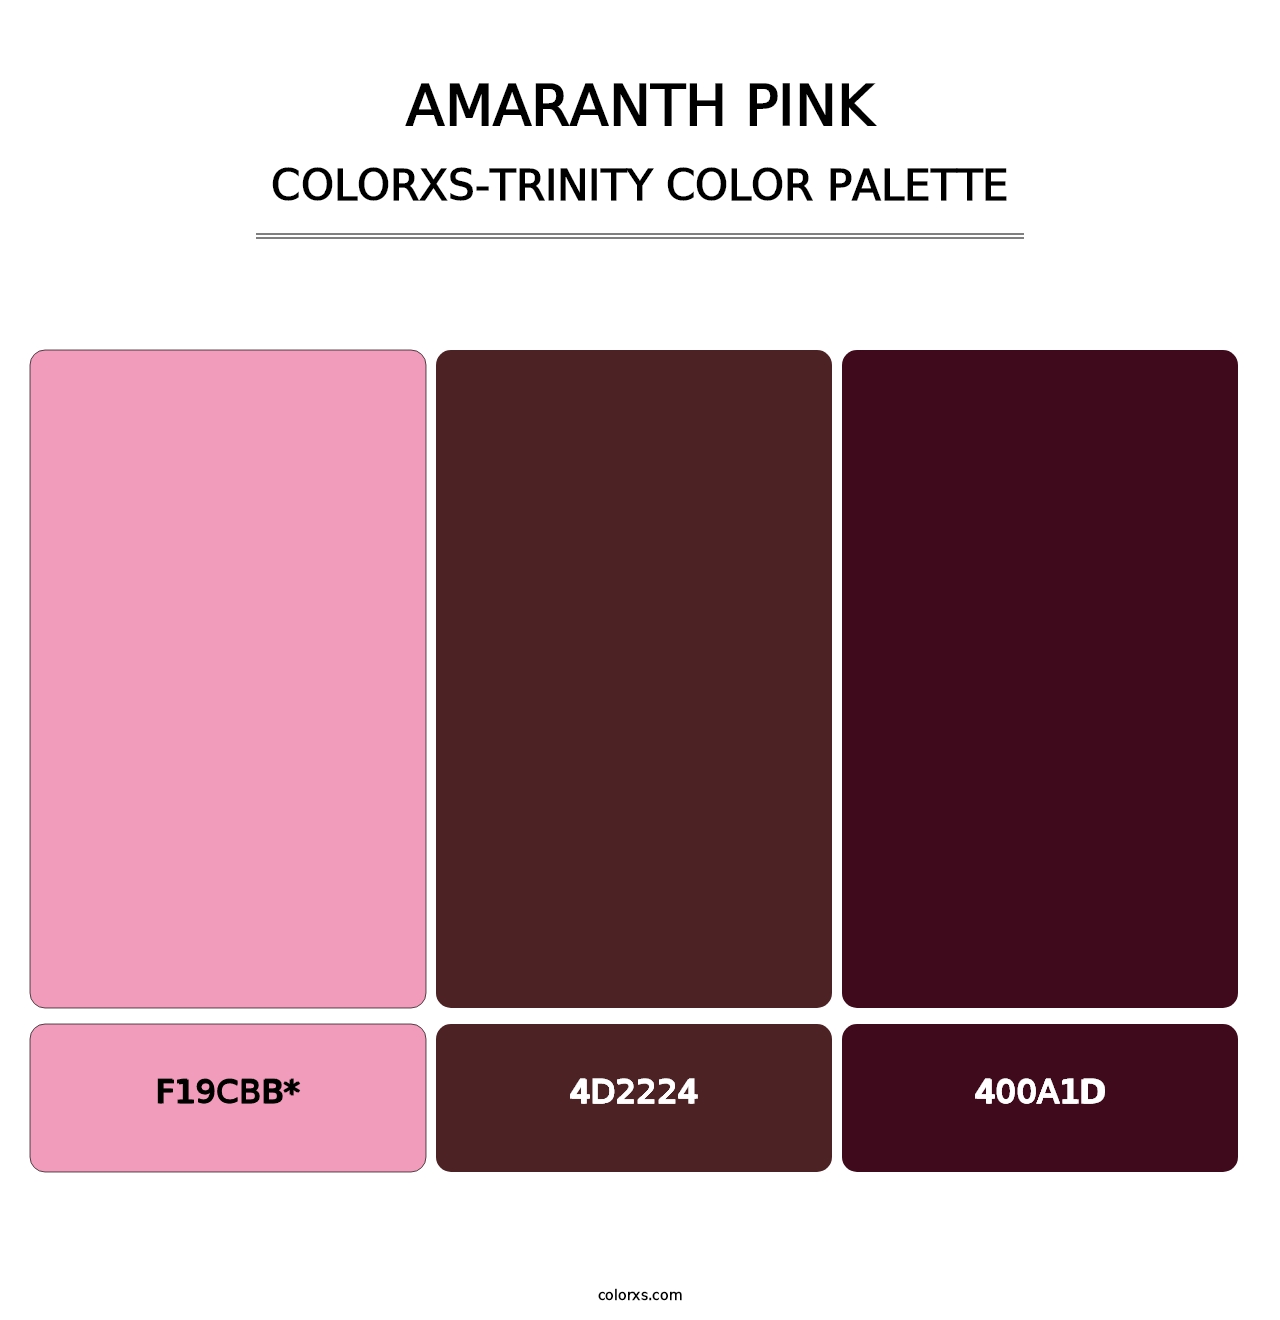 Amaranth Pink - Colorxs Trinity Palette